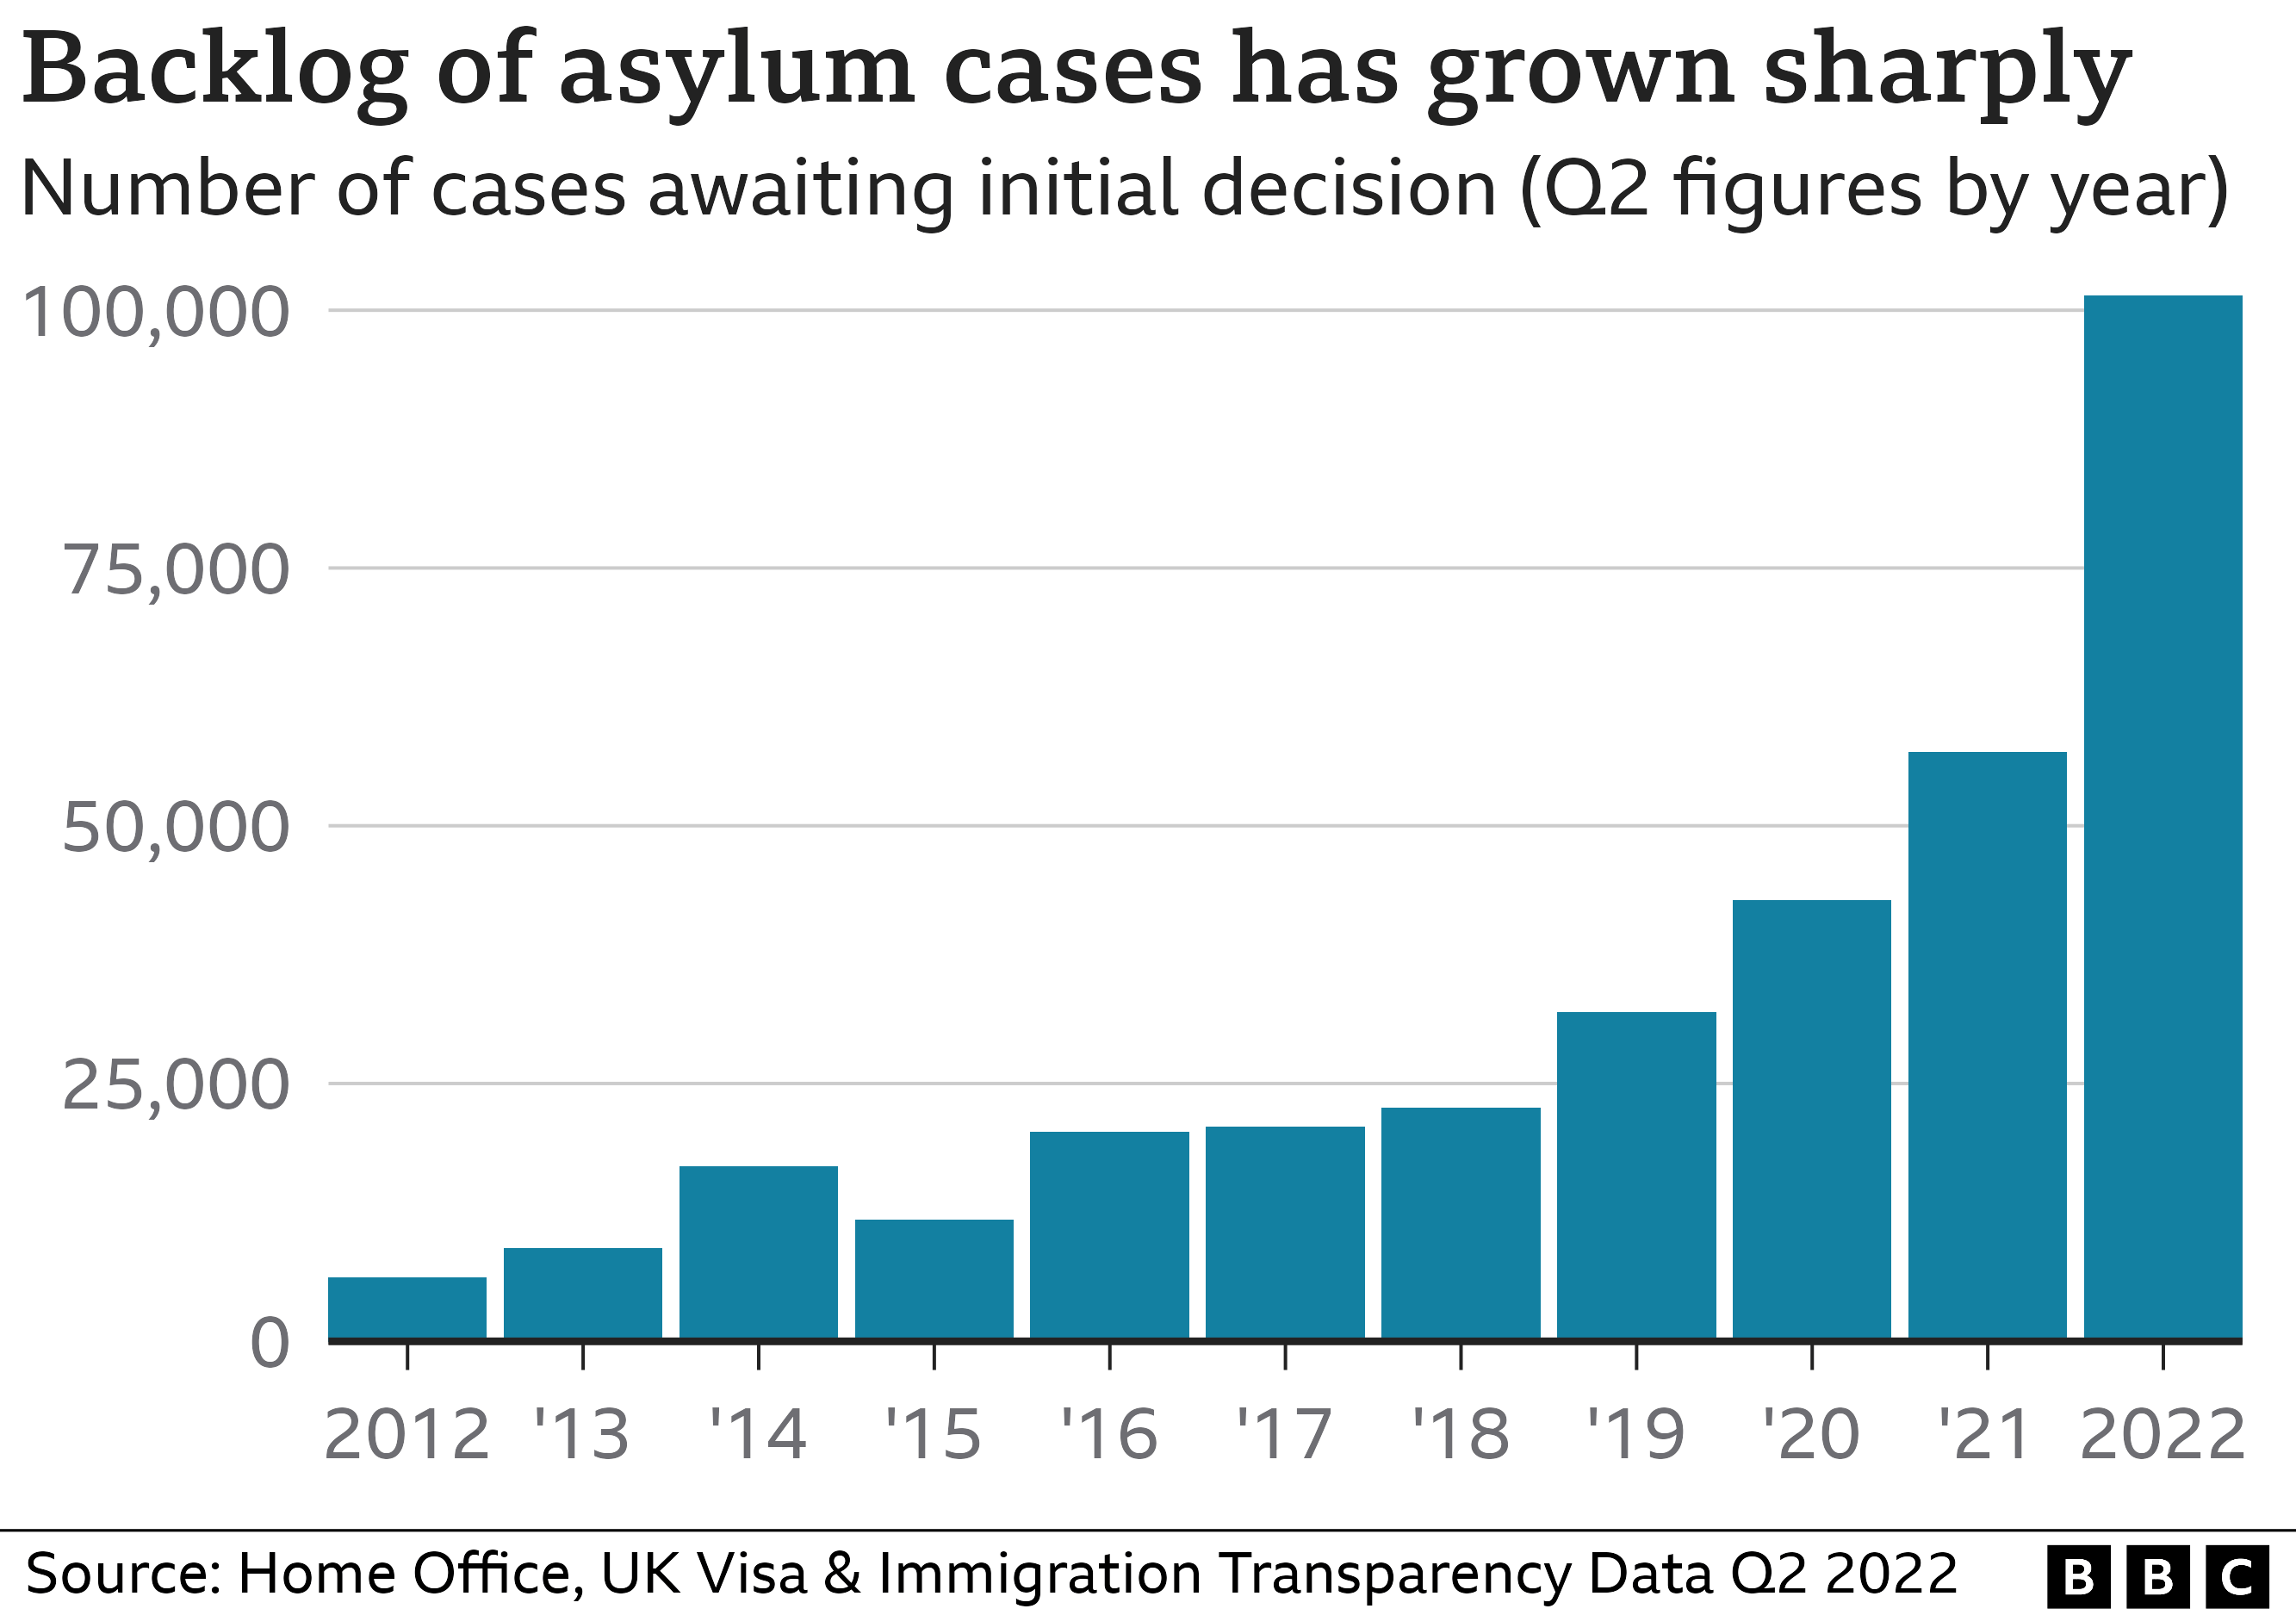 The backlog of asylum cases